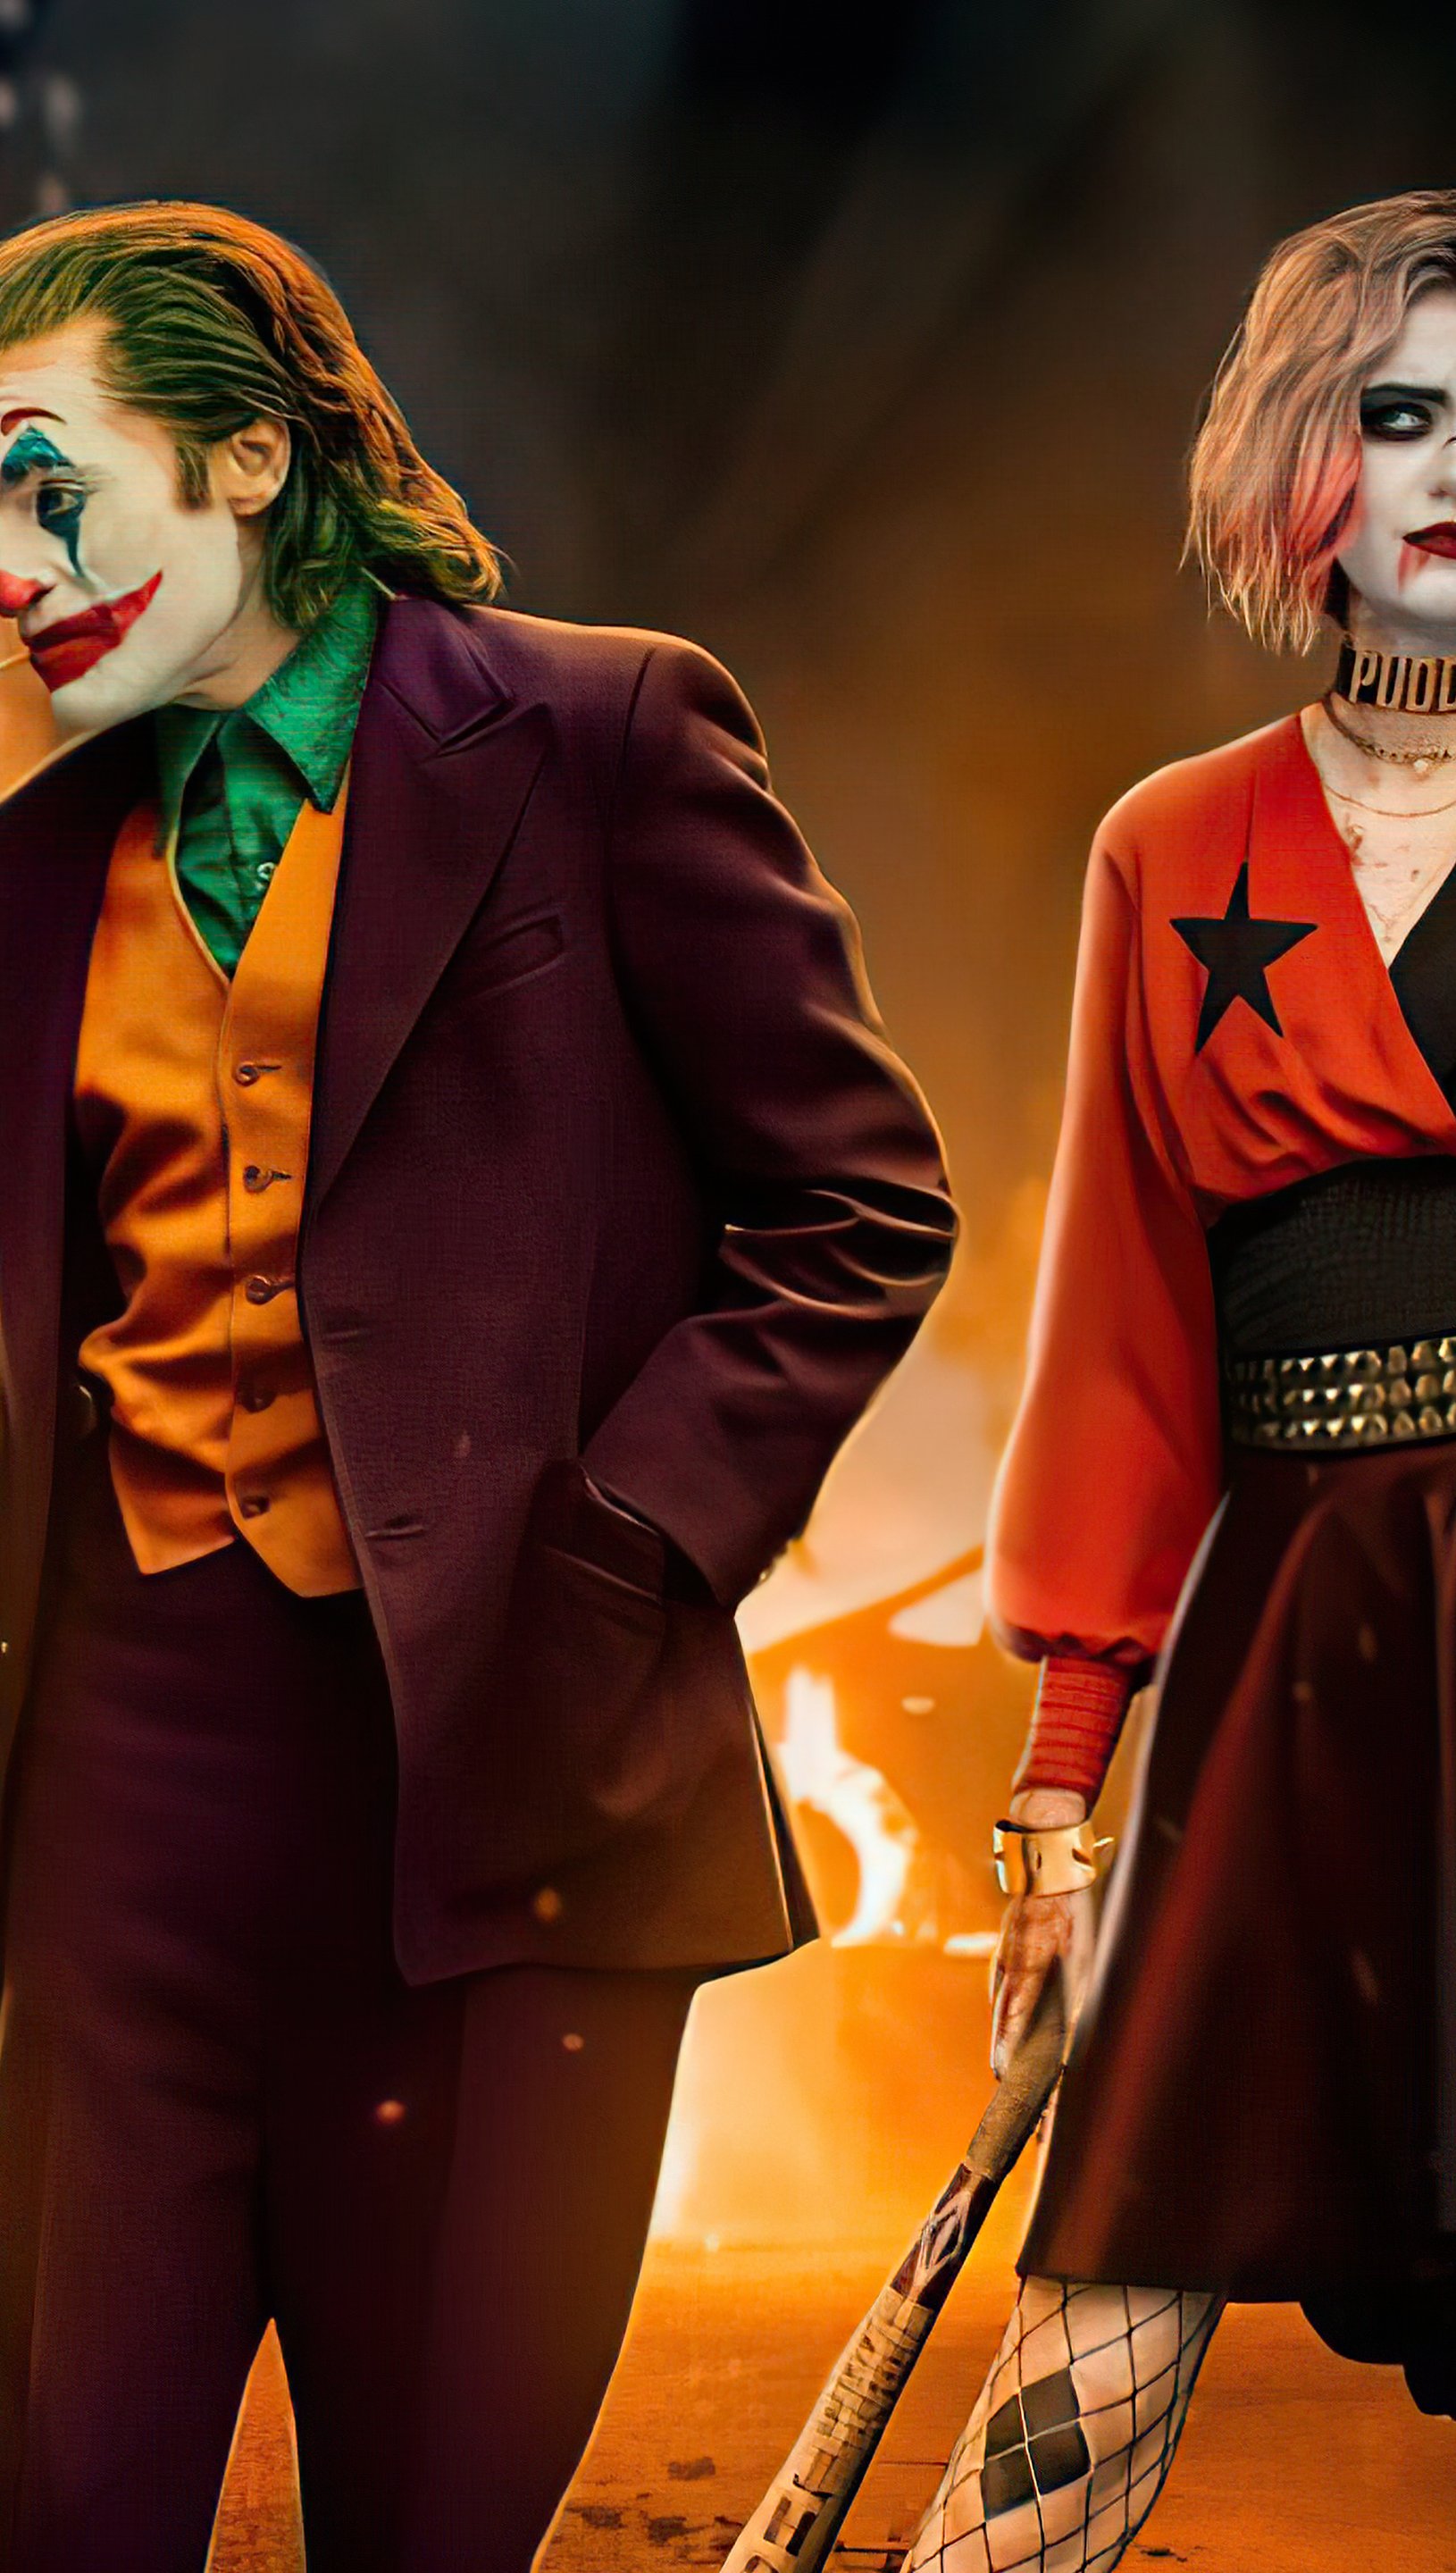 Joker and Harley Queen at crime scene Wallpaper 5k Ultra HD ID:8479